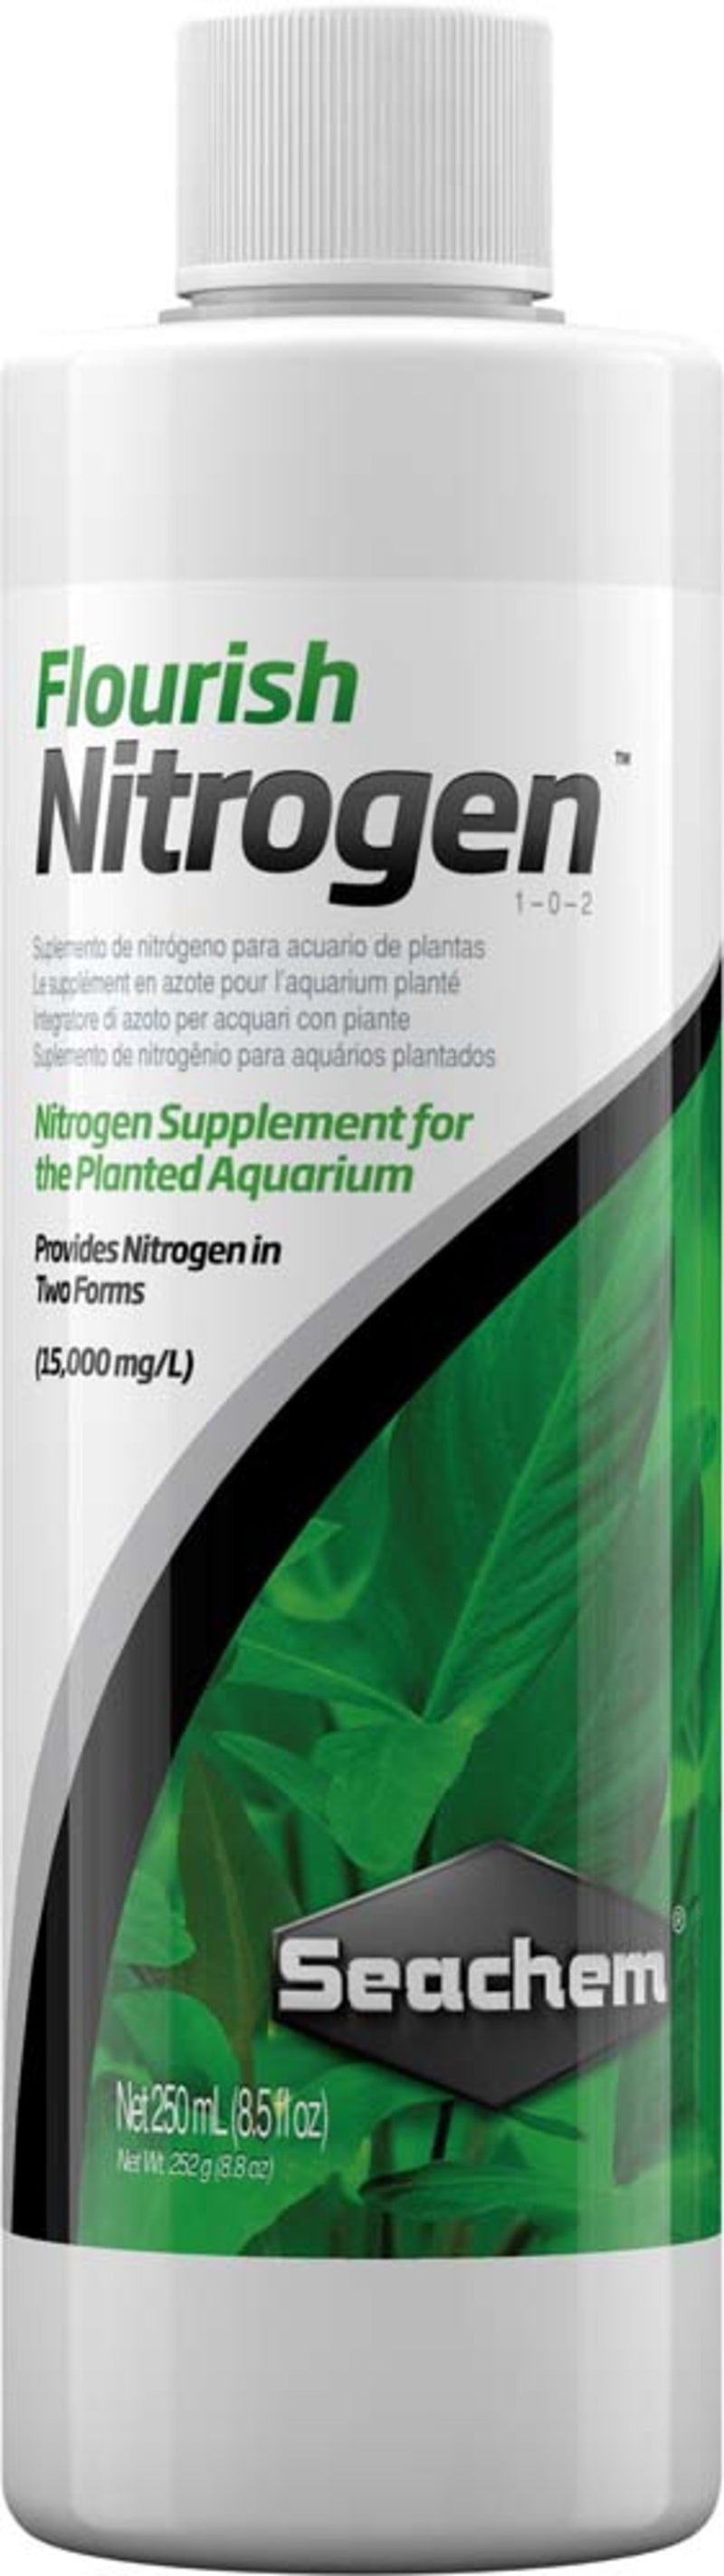 Seachem Laboratories Flourish Nitrogen Plant Supplement